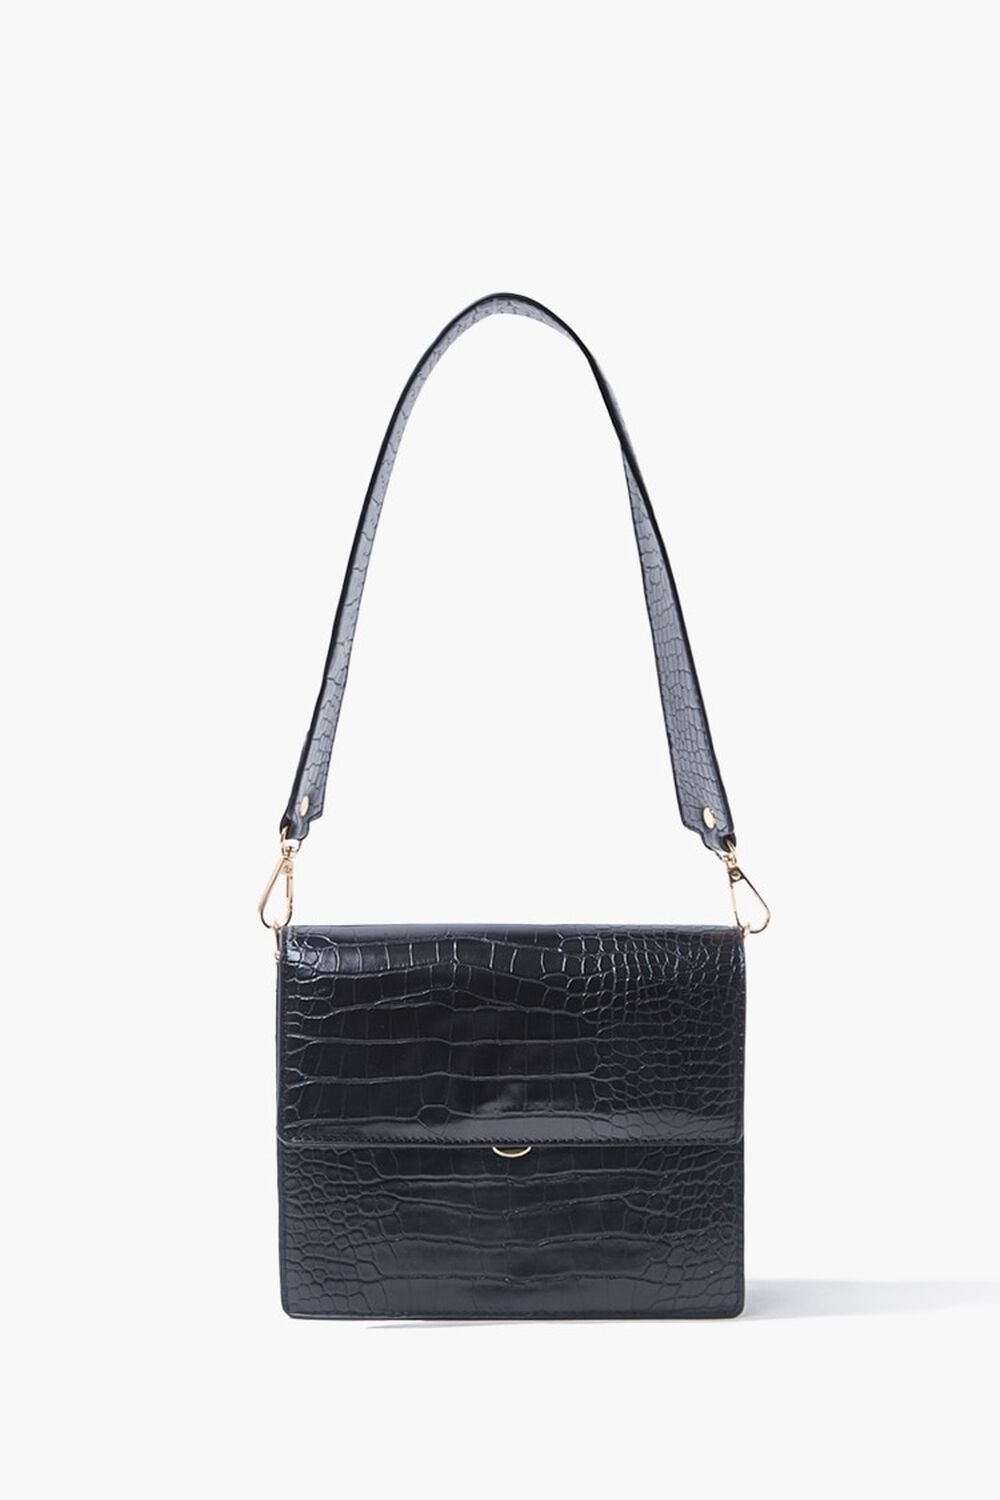 Faux Croc Leather Shoulder Bag, image 1